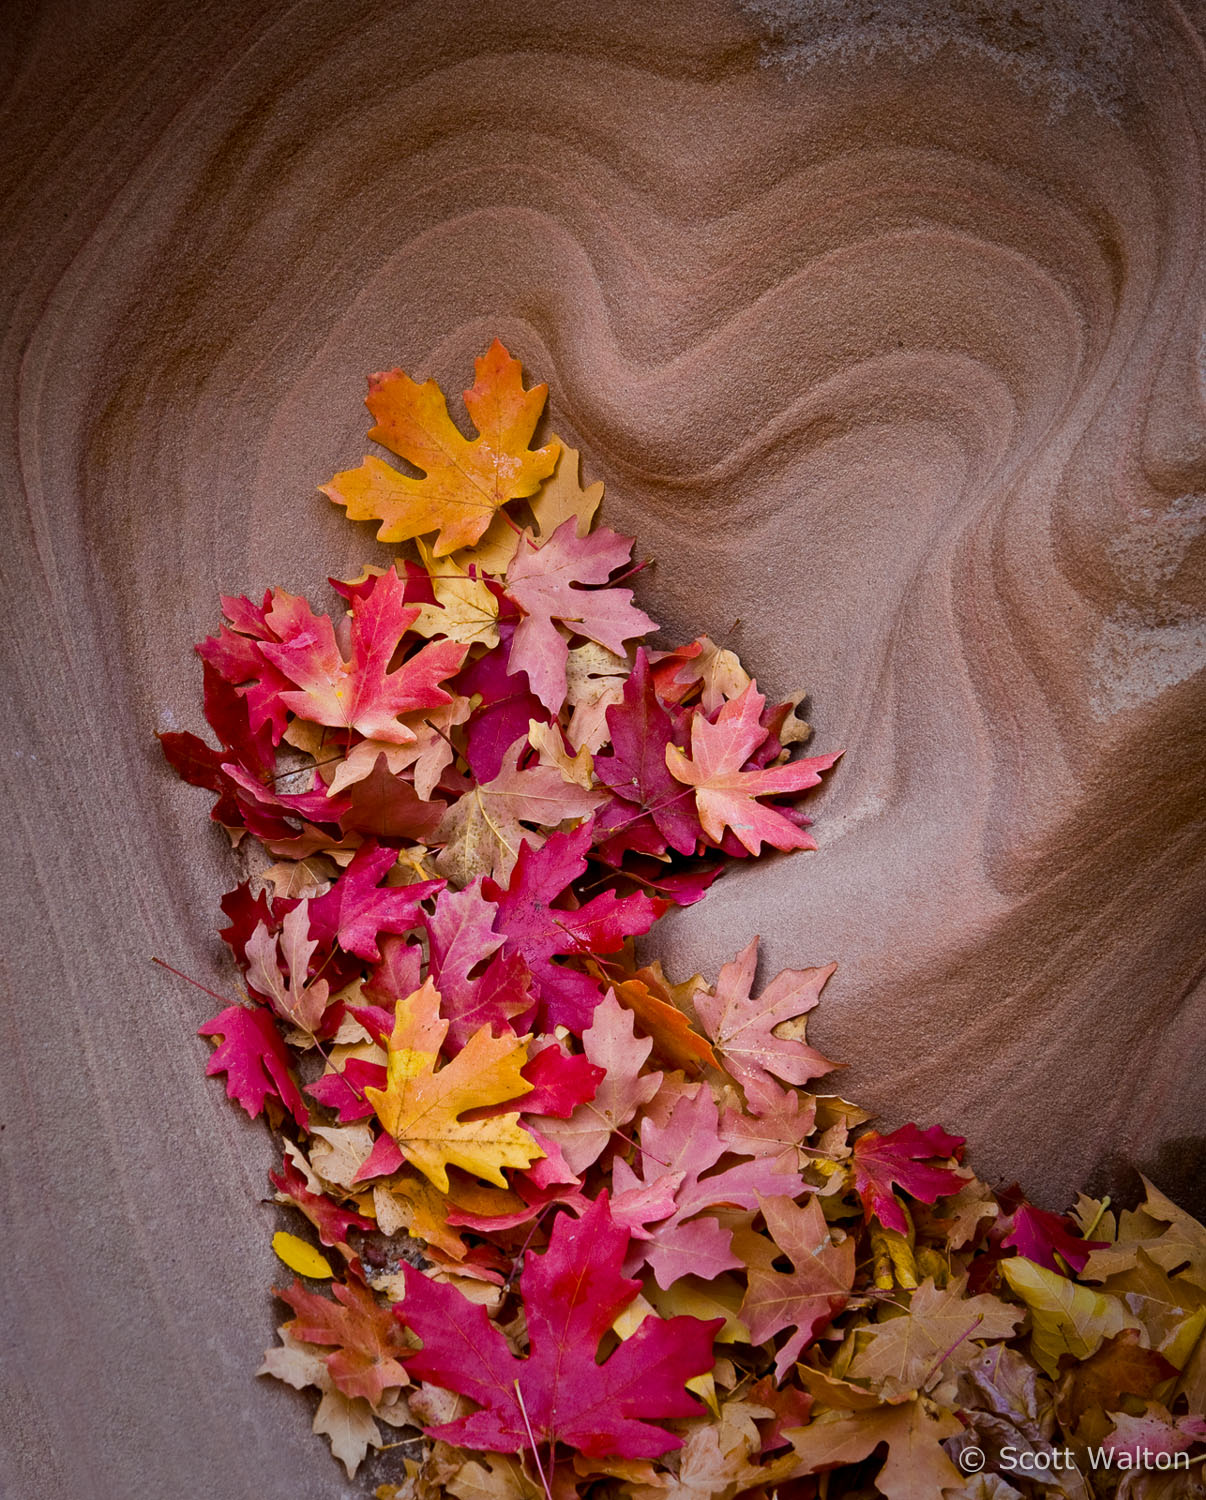 heart-shaped-alcove-autumn-leaves-zion-national-park-utah.jpg